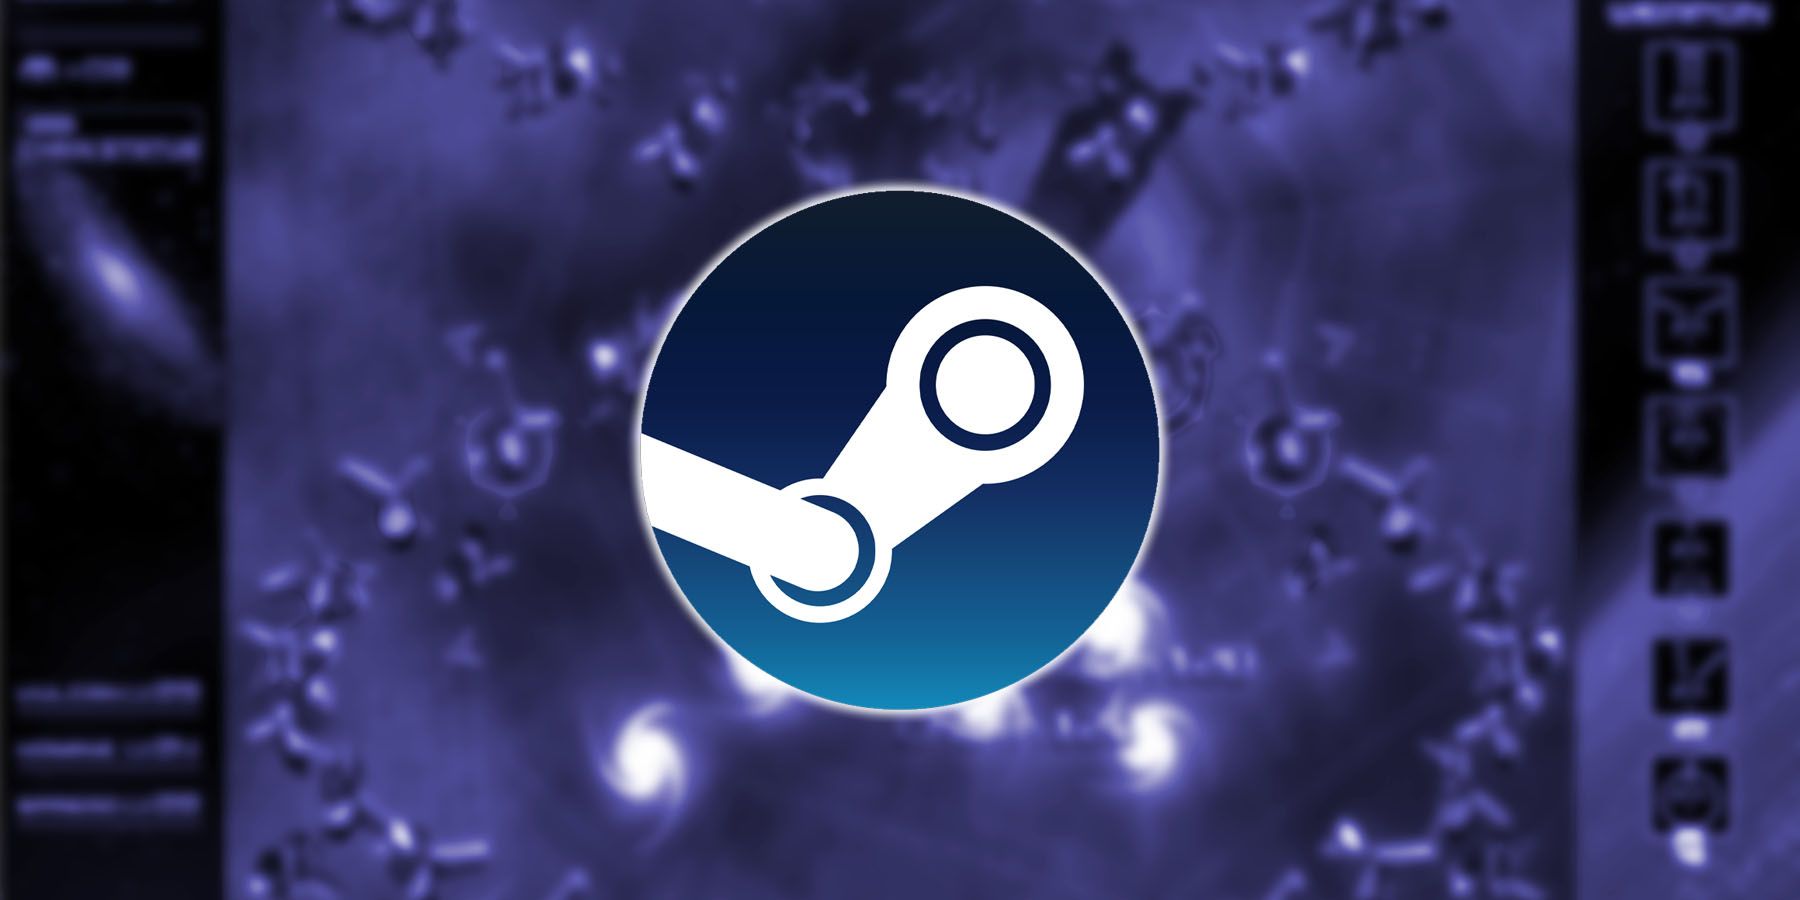 Radiant Silvergun Steam Release Date